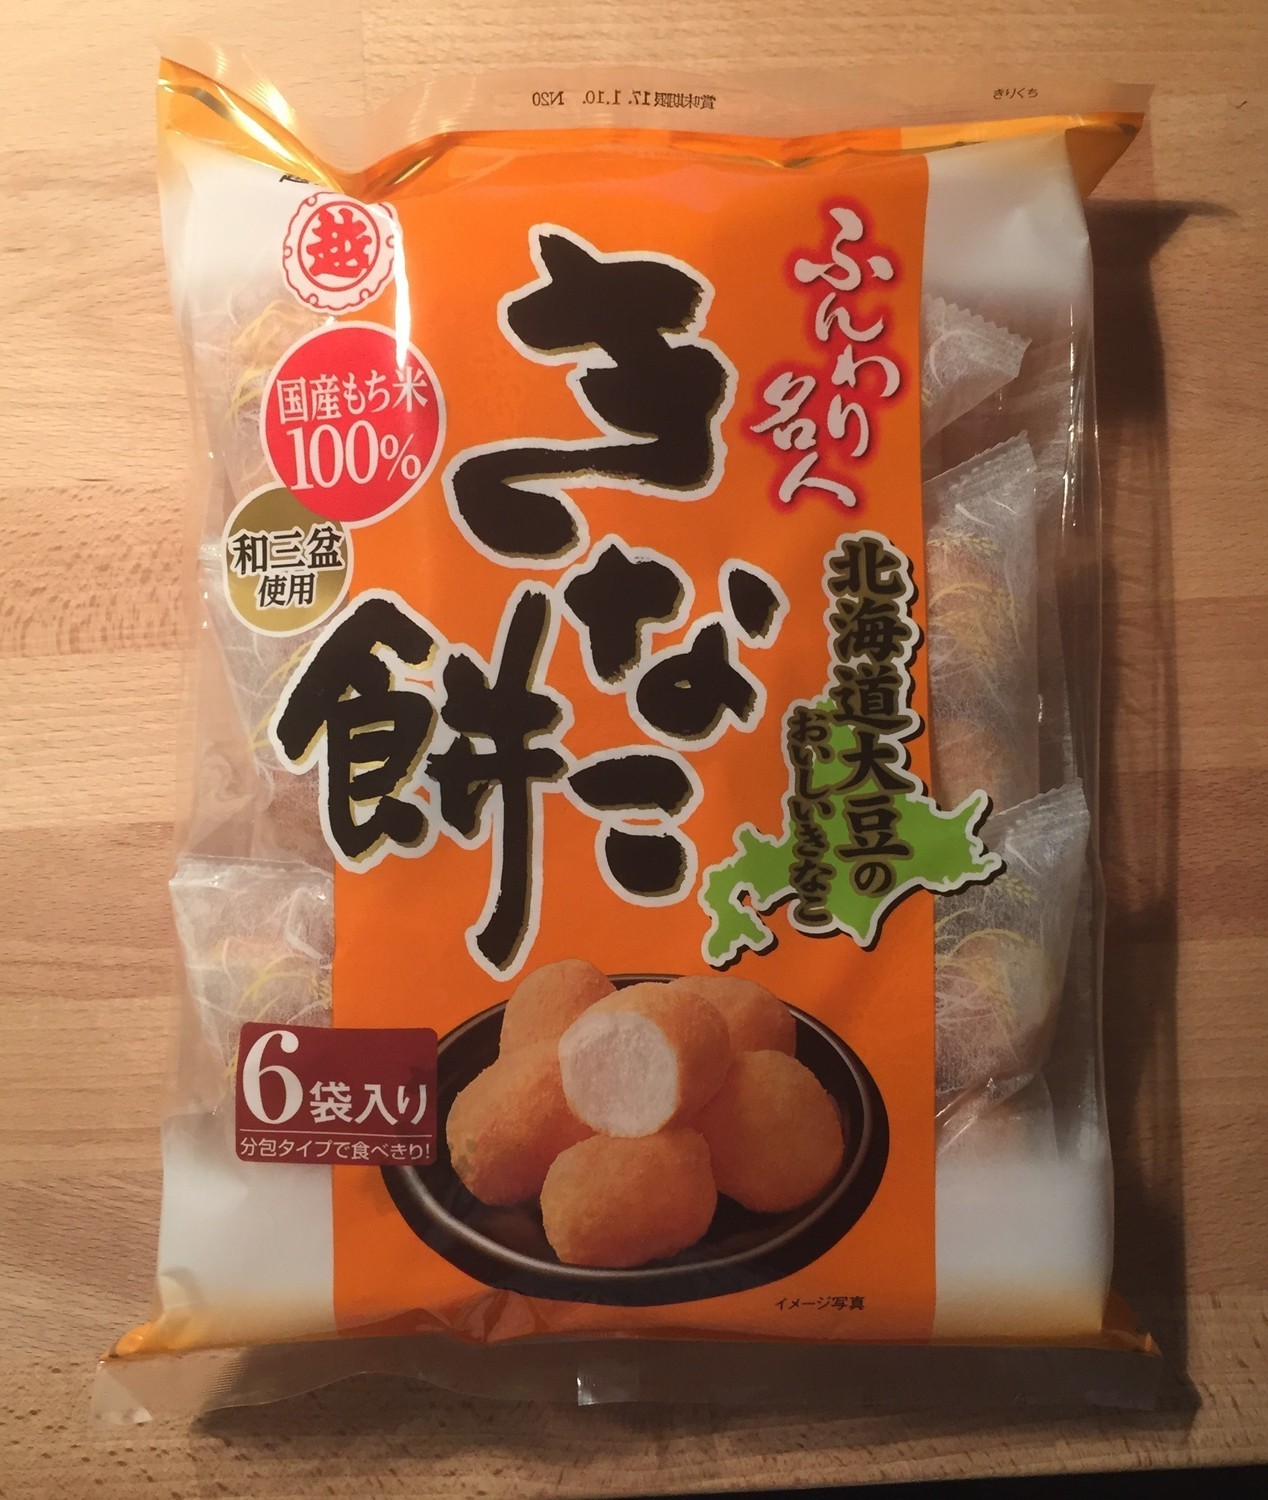 Echigo Seika "Kinako Mochi", Funwari Meijin, 6 packs in 1 bag, 85g